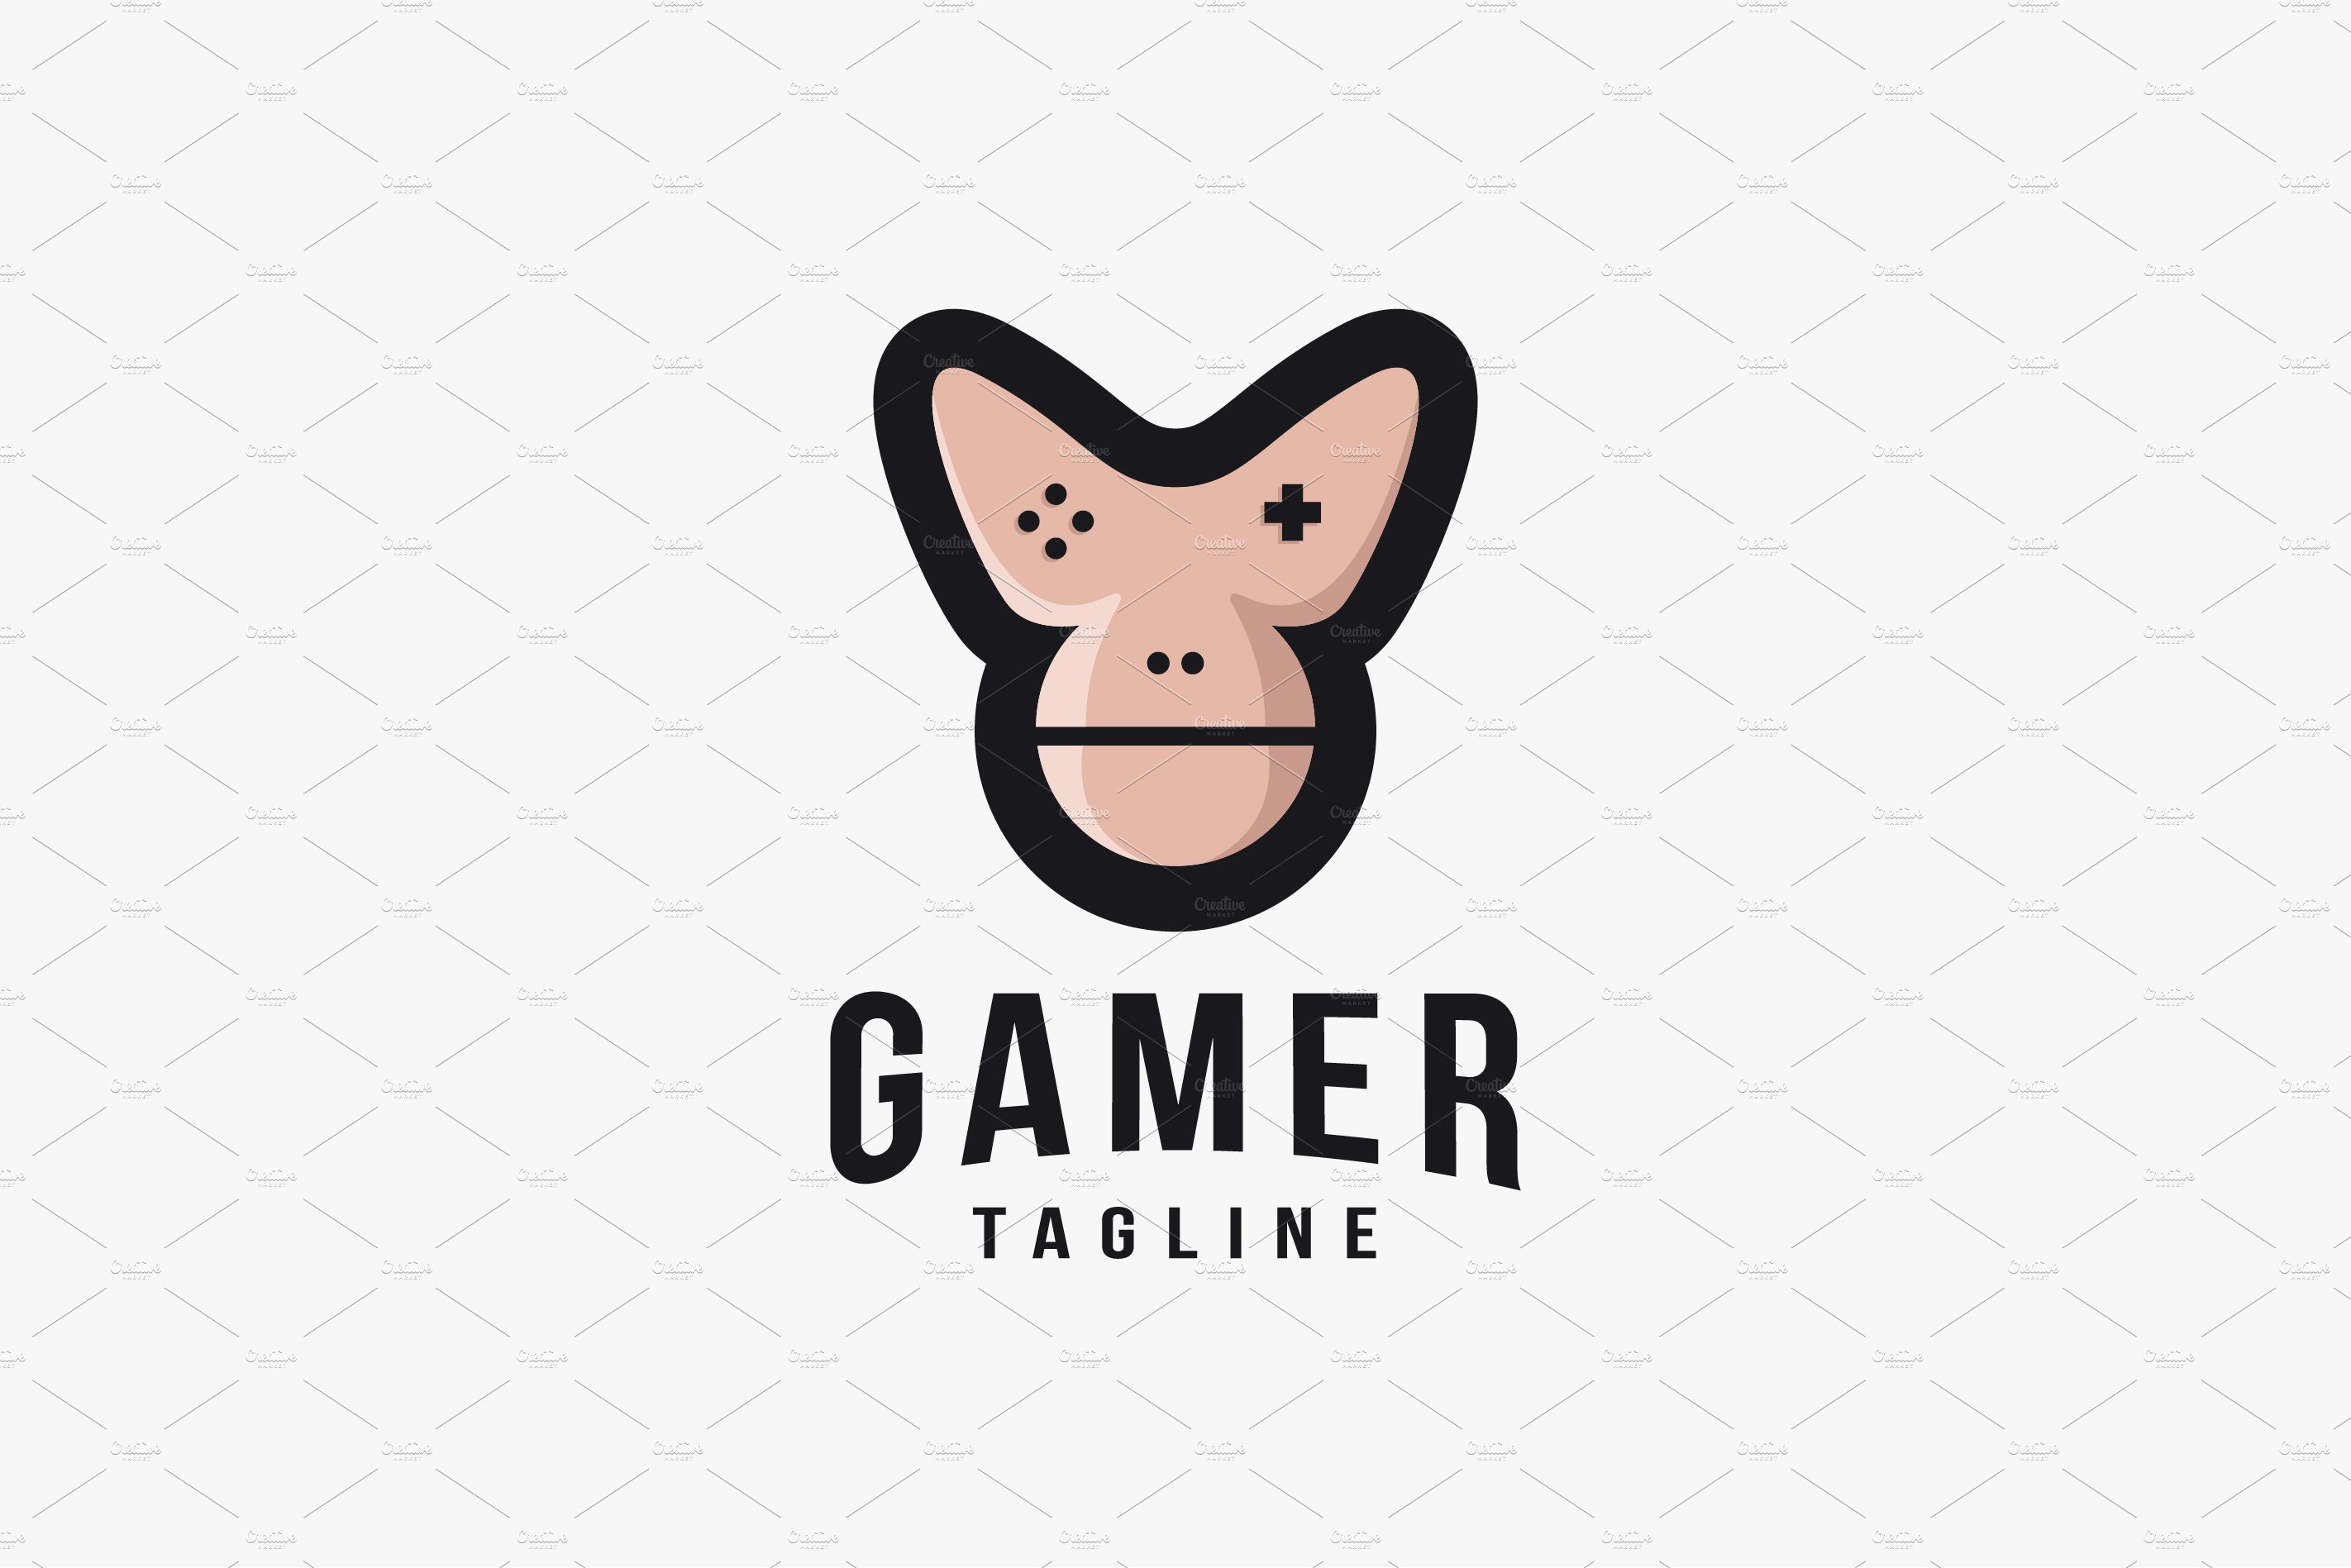 Chimp gamer, joystick monkey logo cover image.